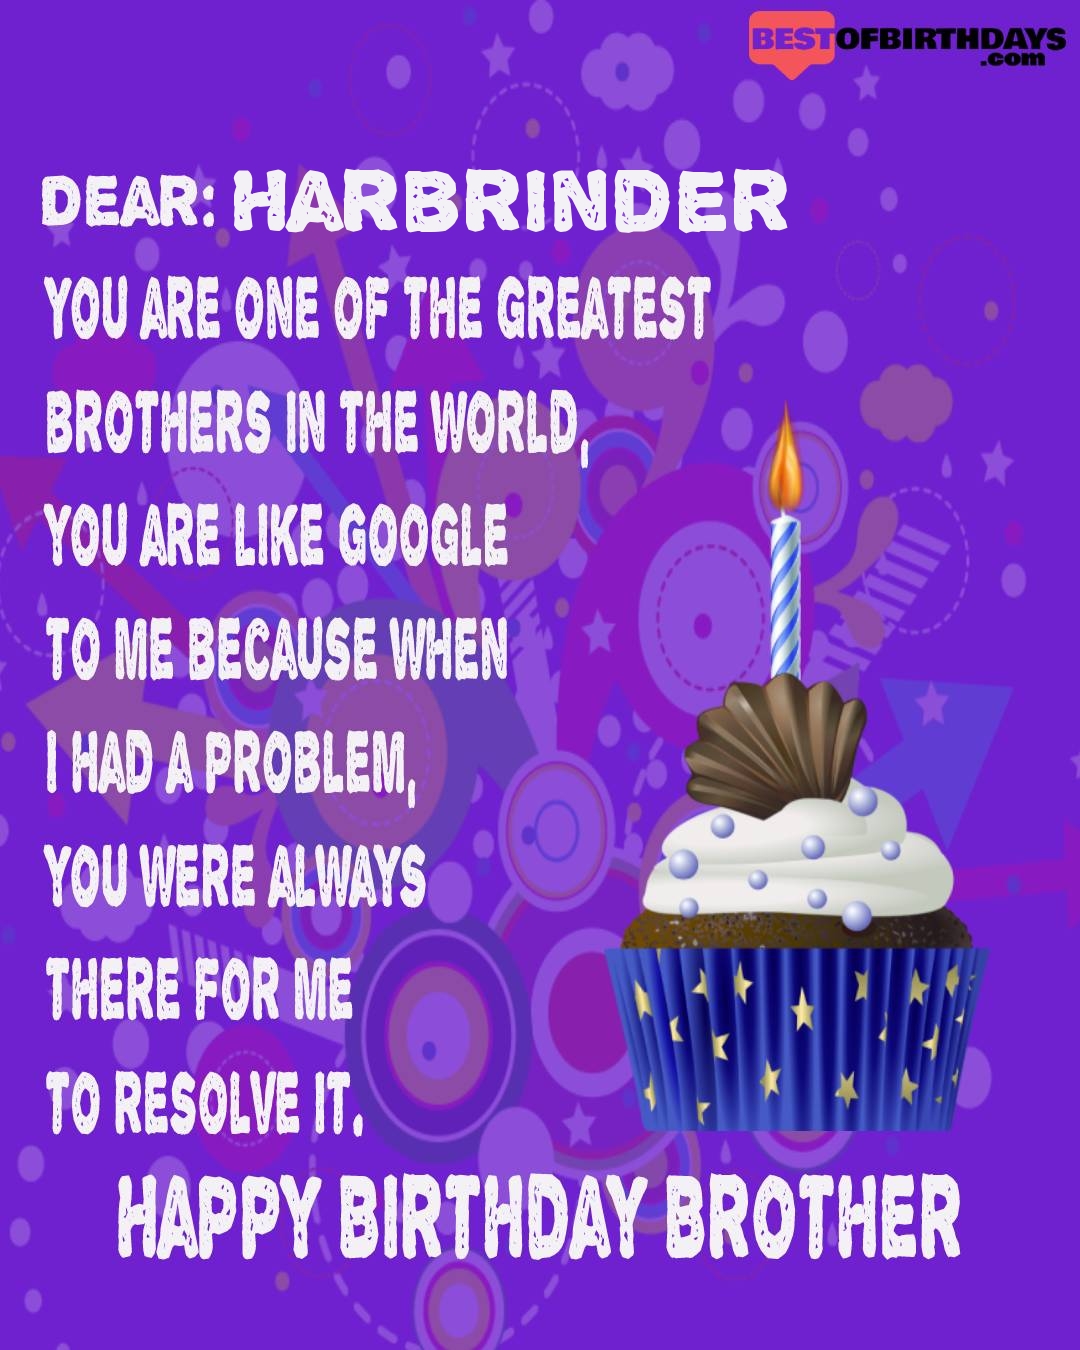 Happy birthday harbrinder bhai brother bro